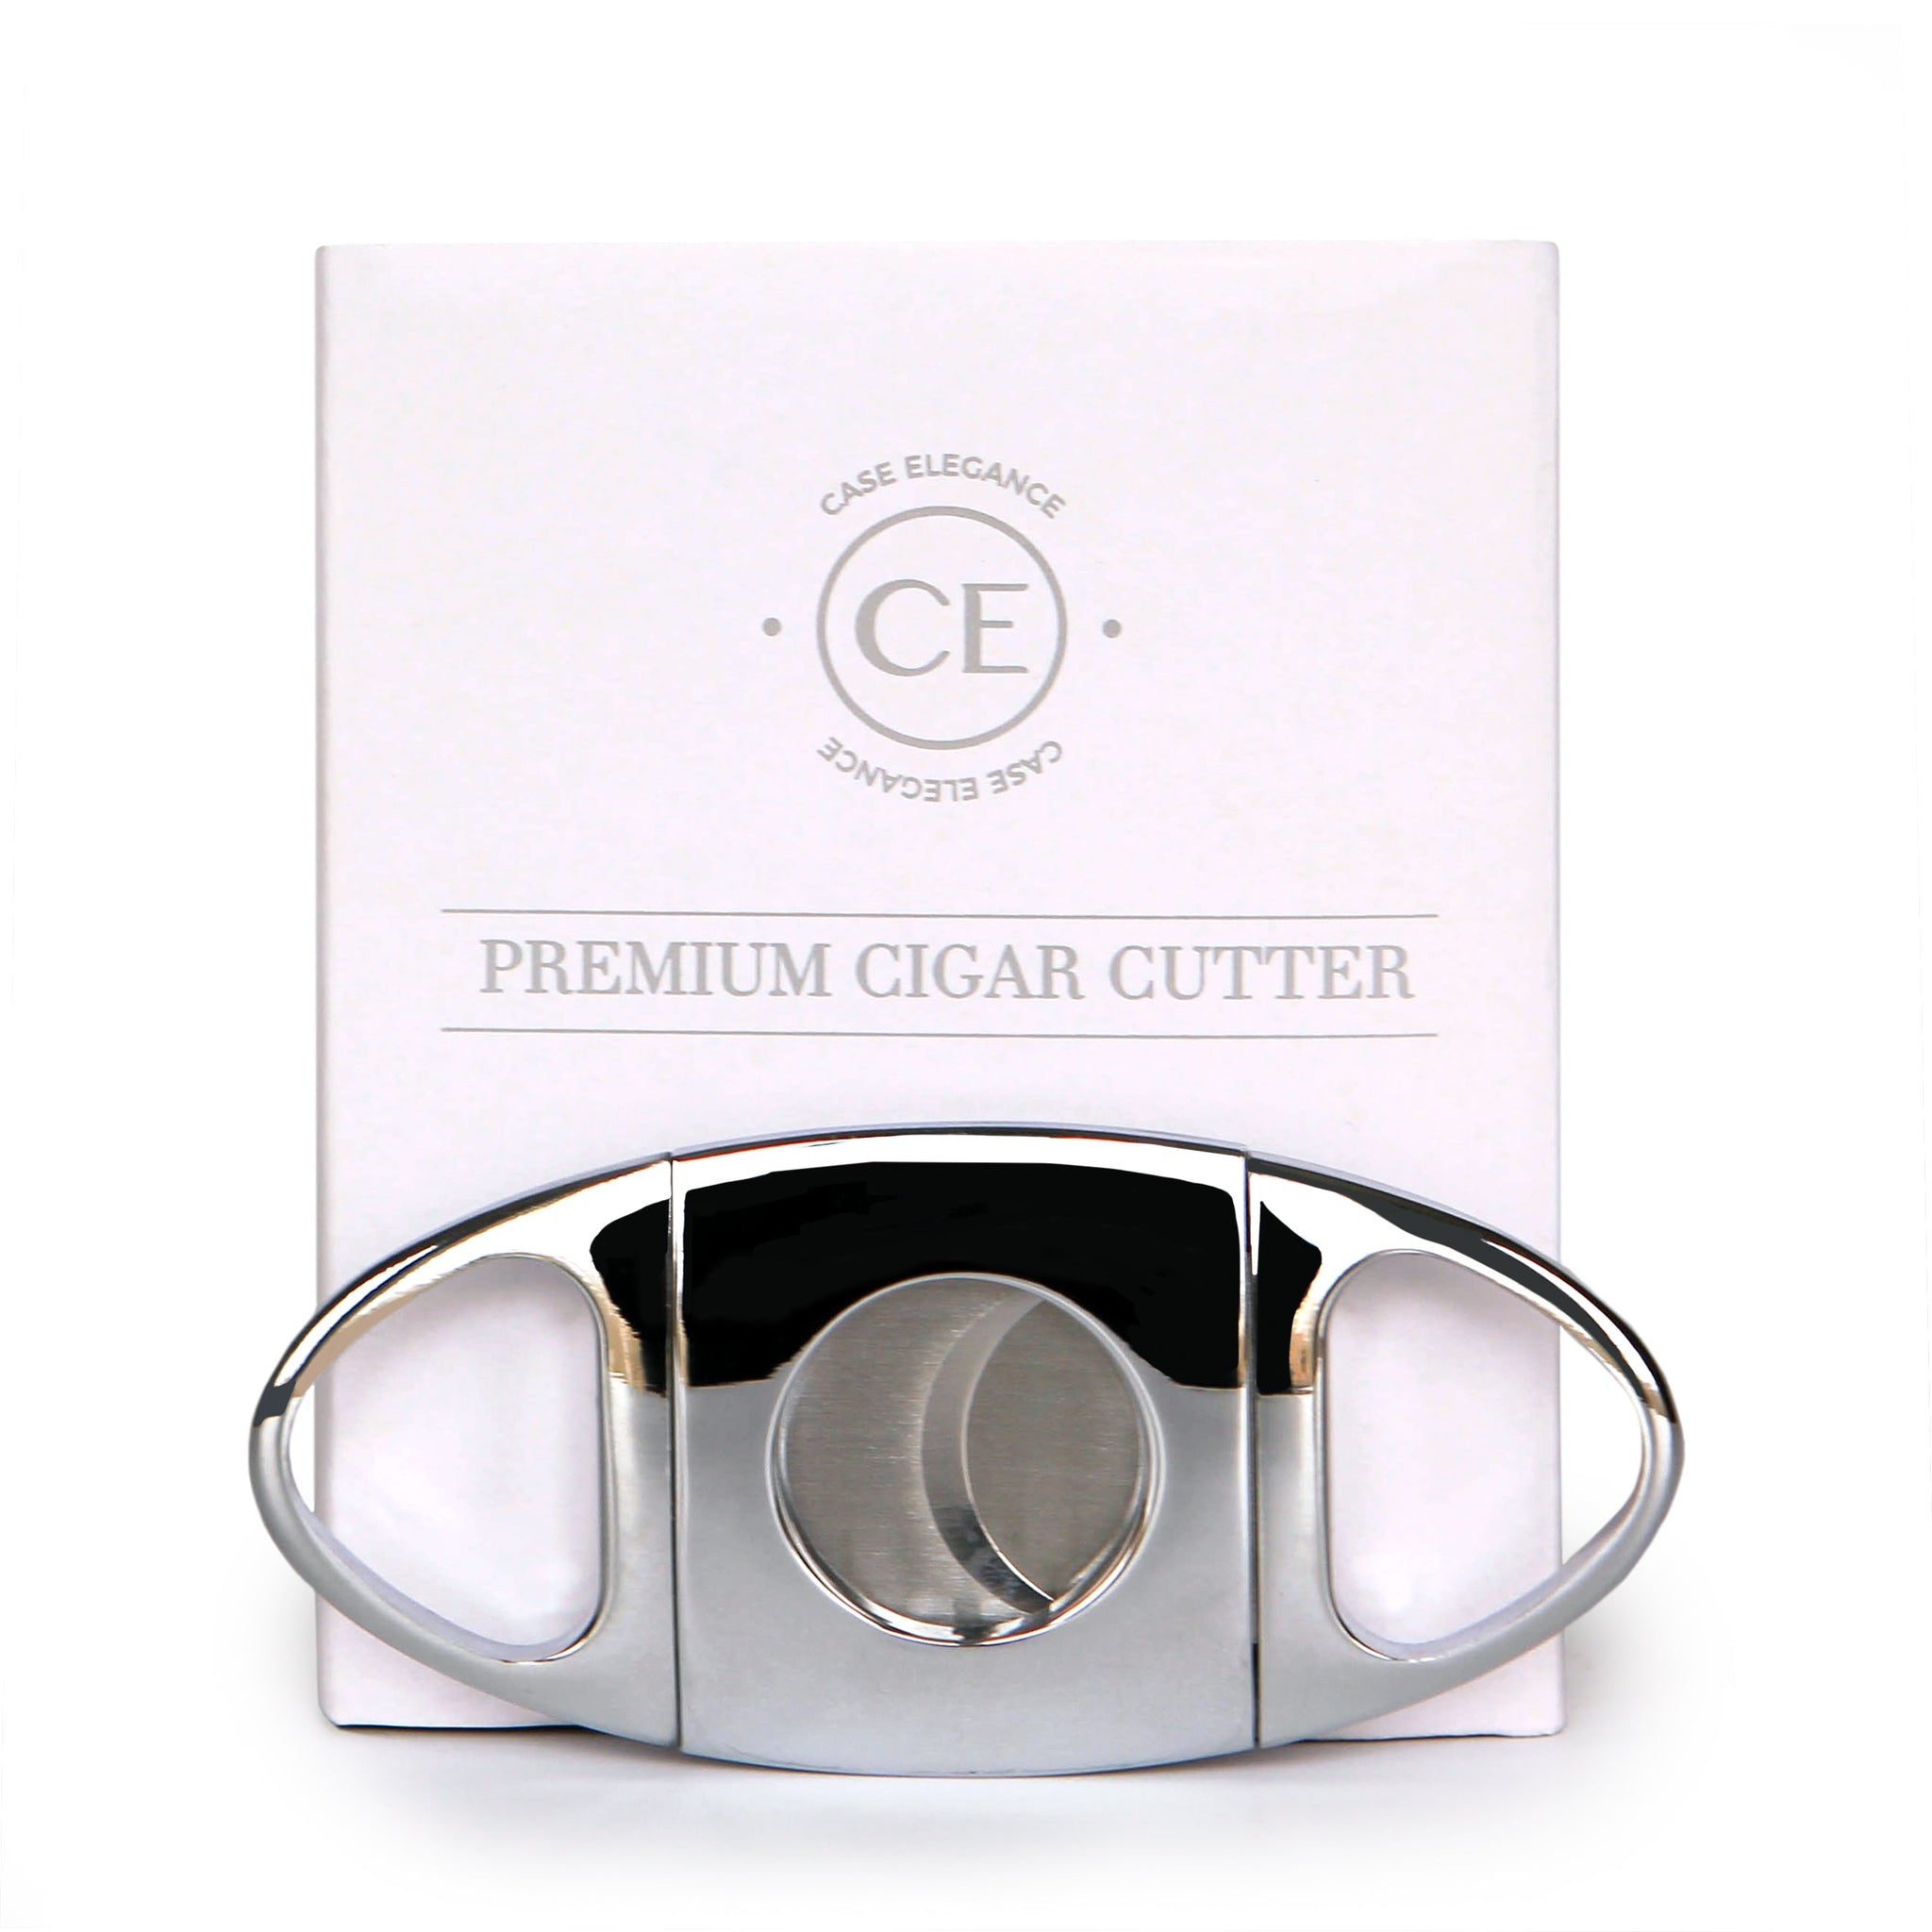 Klaro Chrome Cigar Cutter by Case Elegance